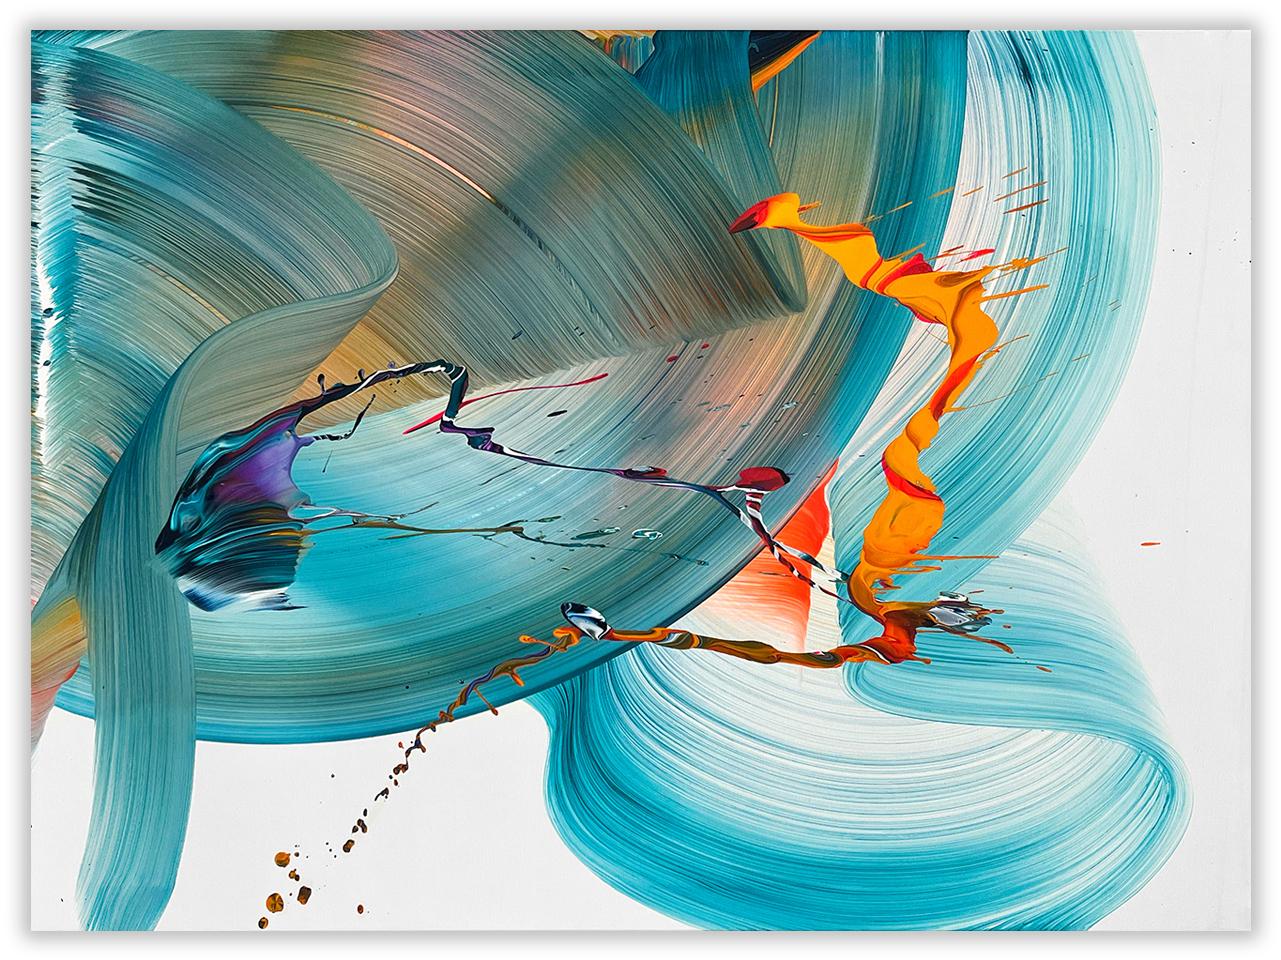 Abstract Painting Nikolaos Schizas - Bleu vent (peinture abstraite)